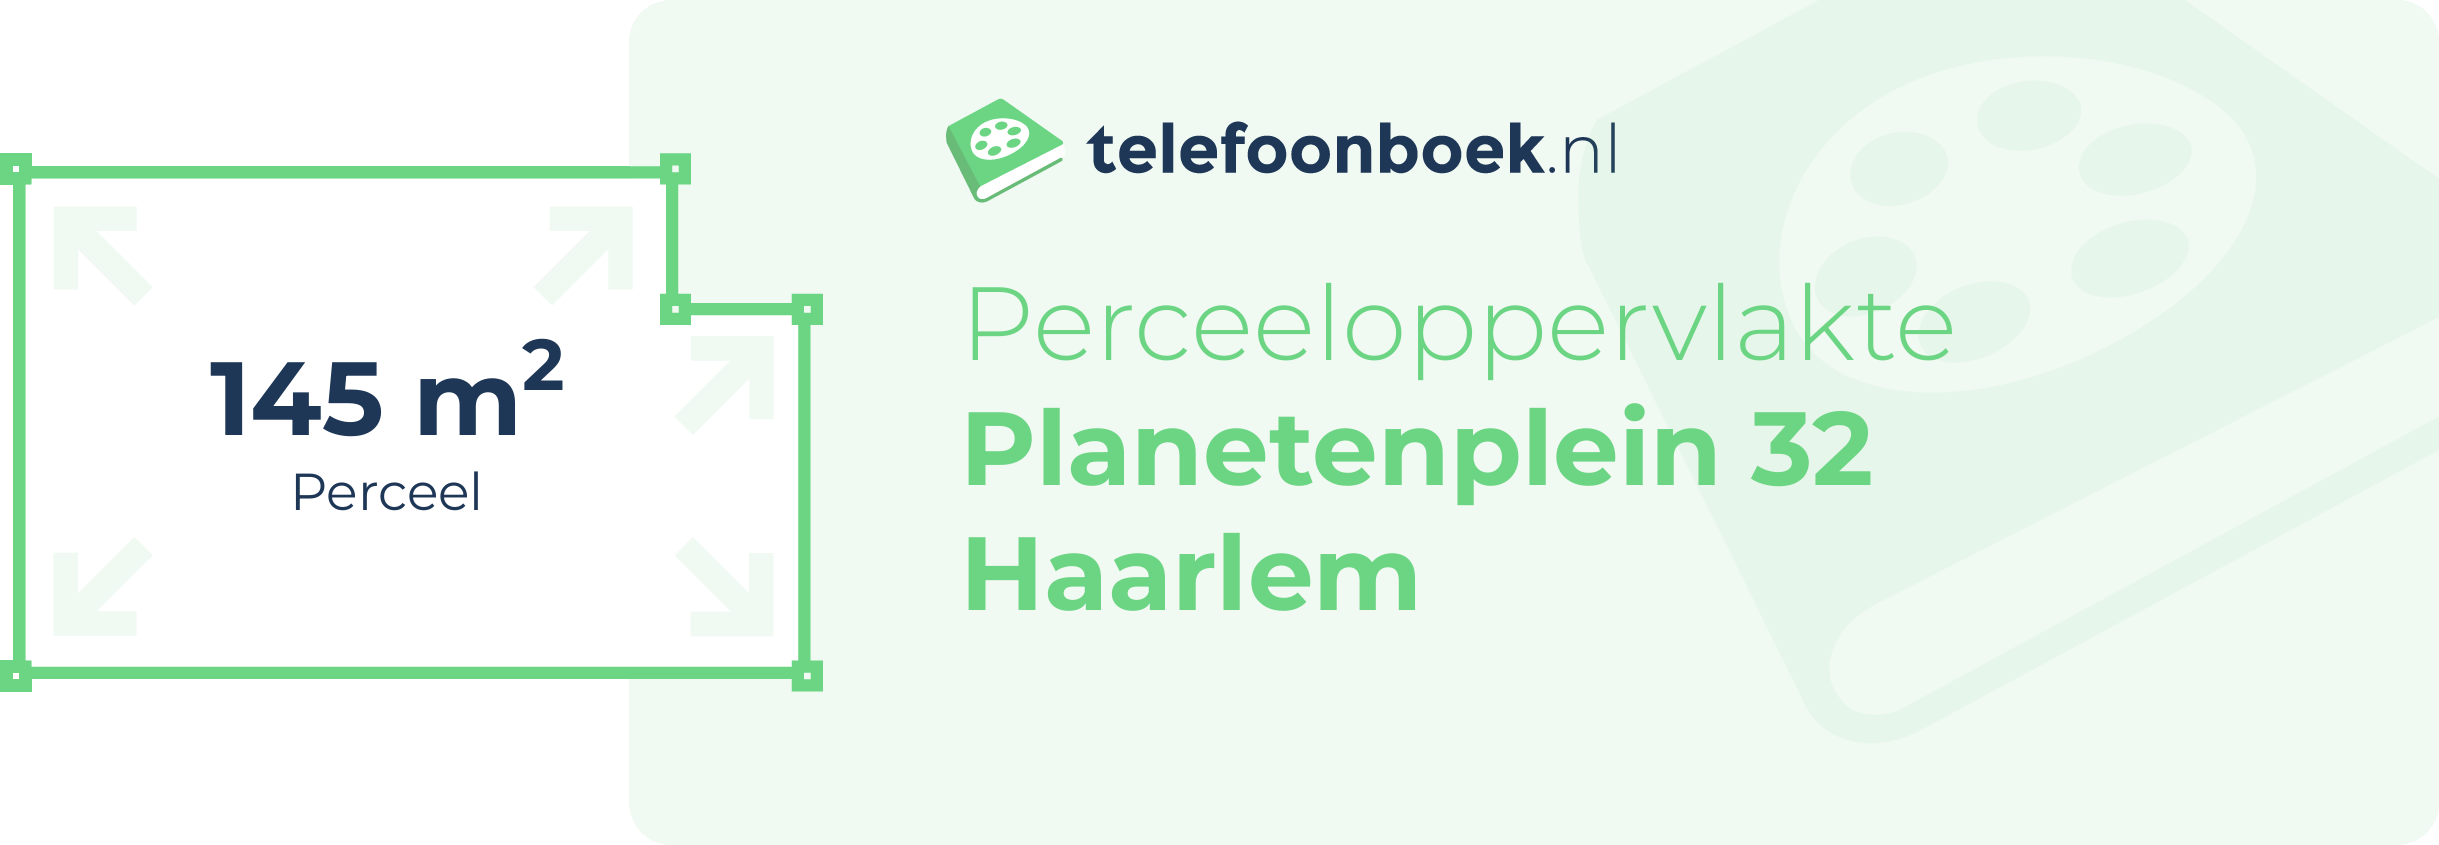 Perceeloppervlakte Planetenplein 32 Haarlem